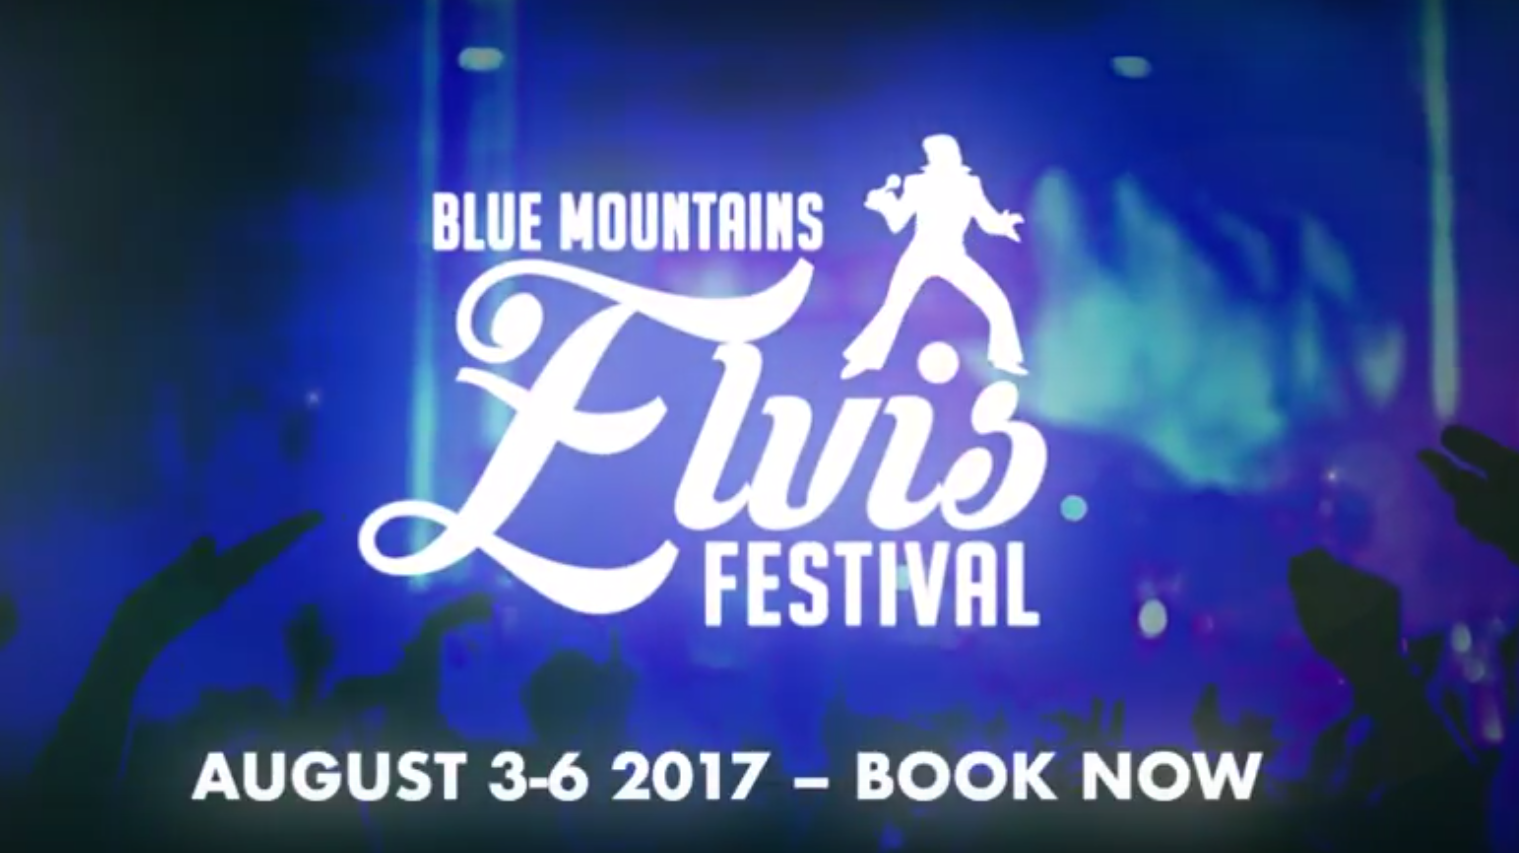 The Blue Mountains Elvis Festival